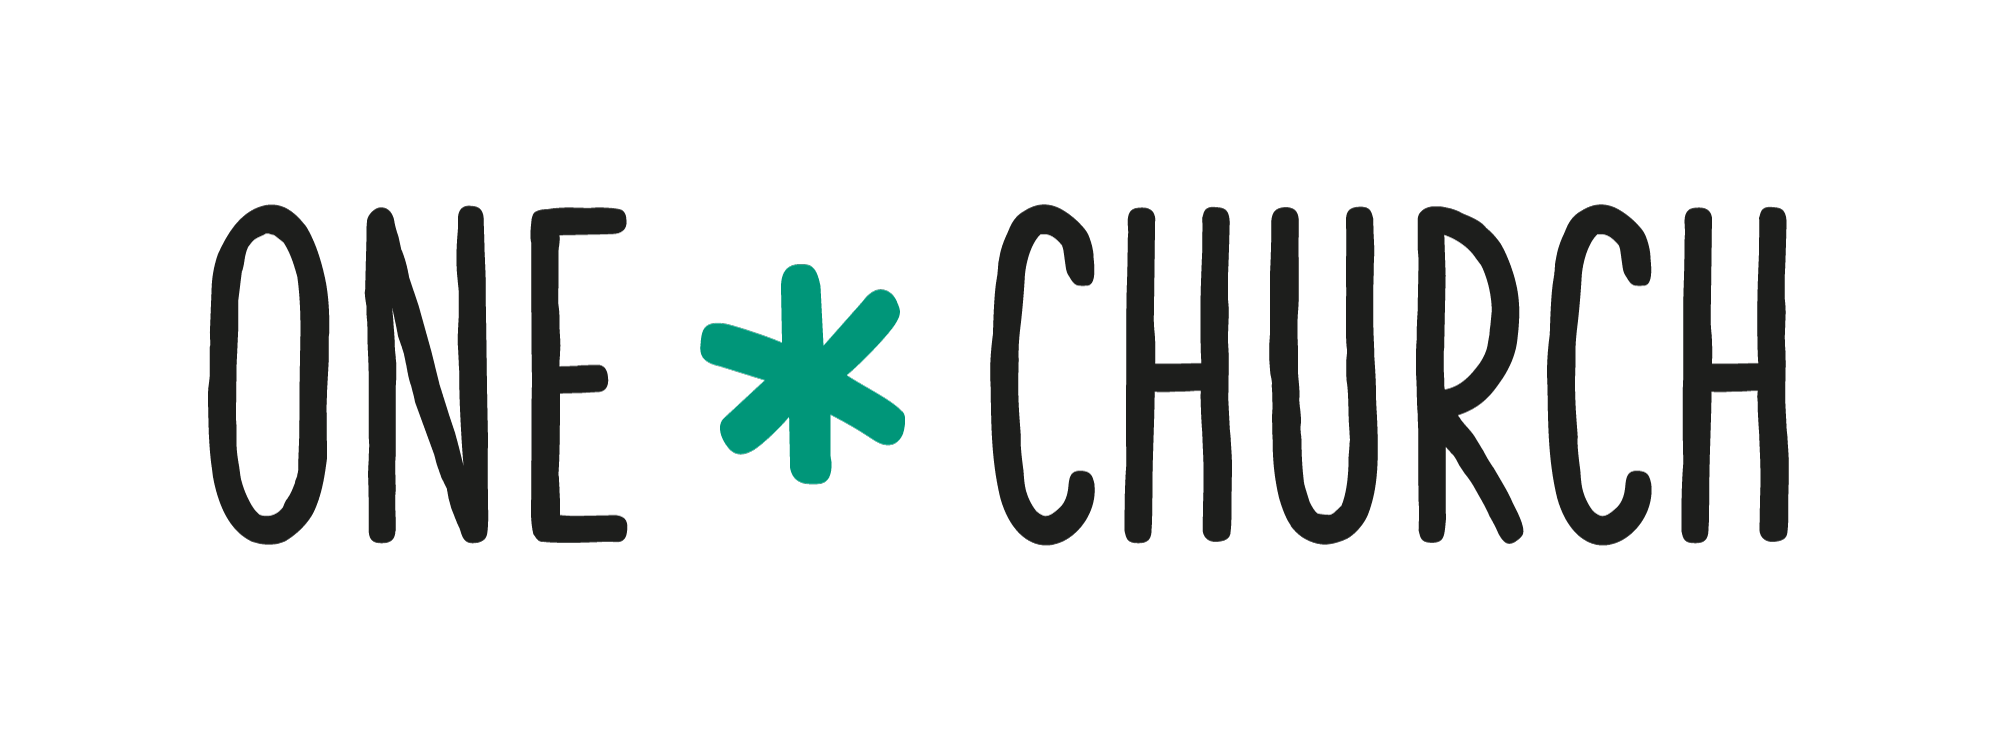 one church logo